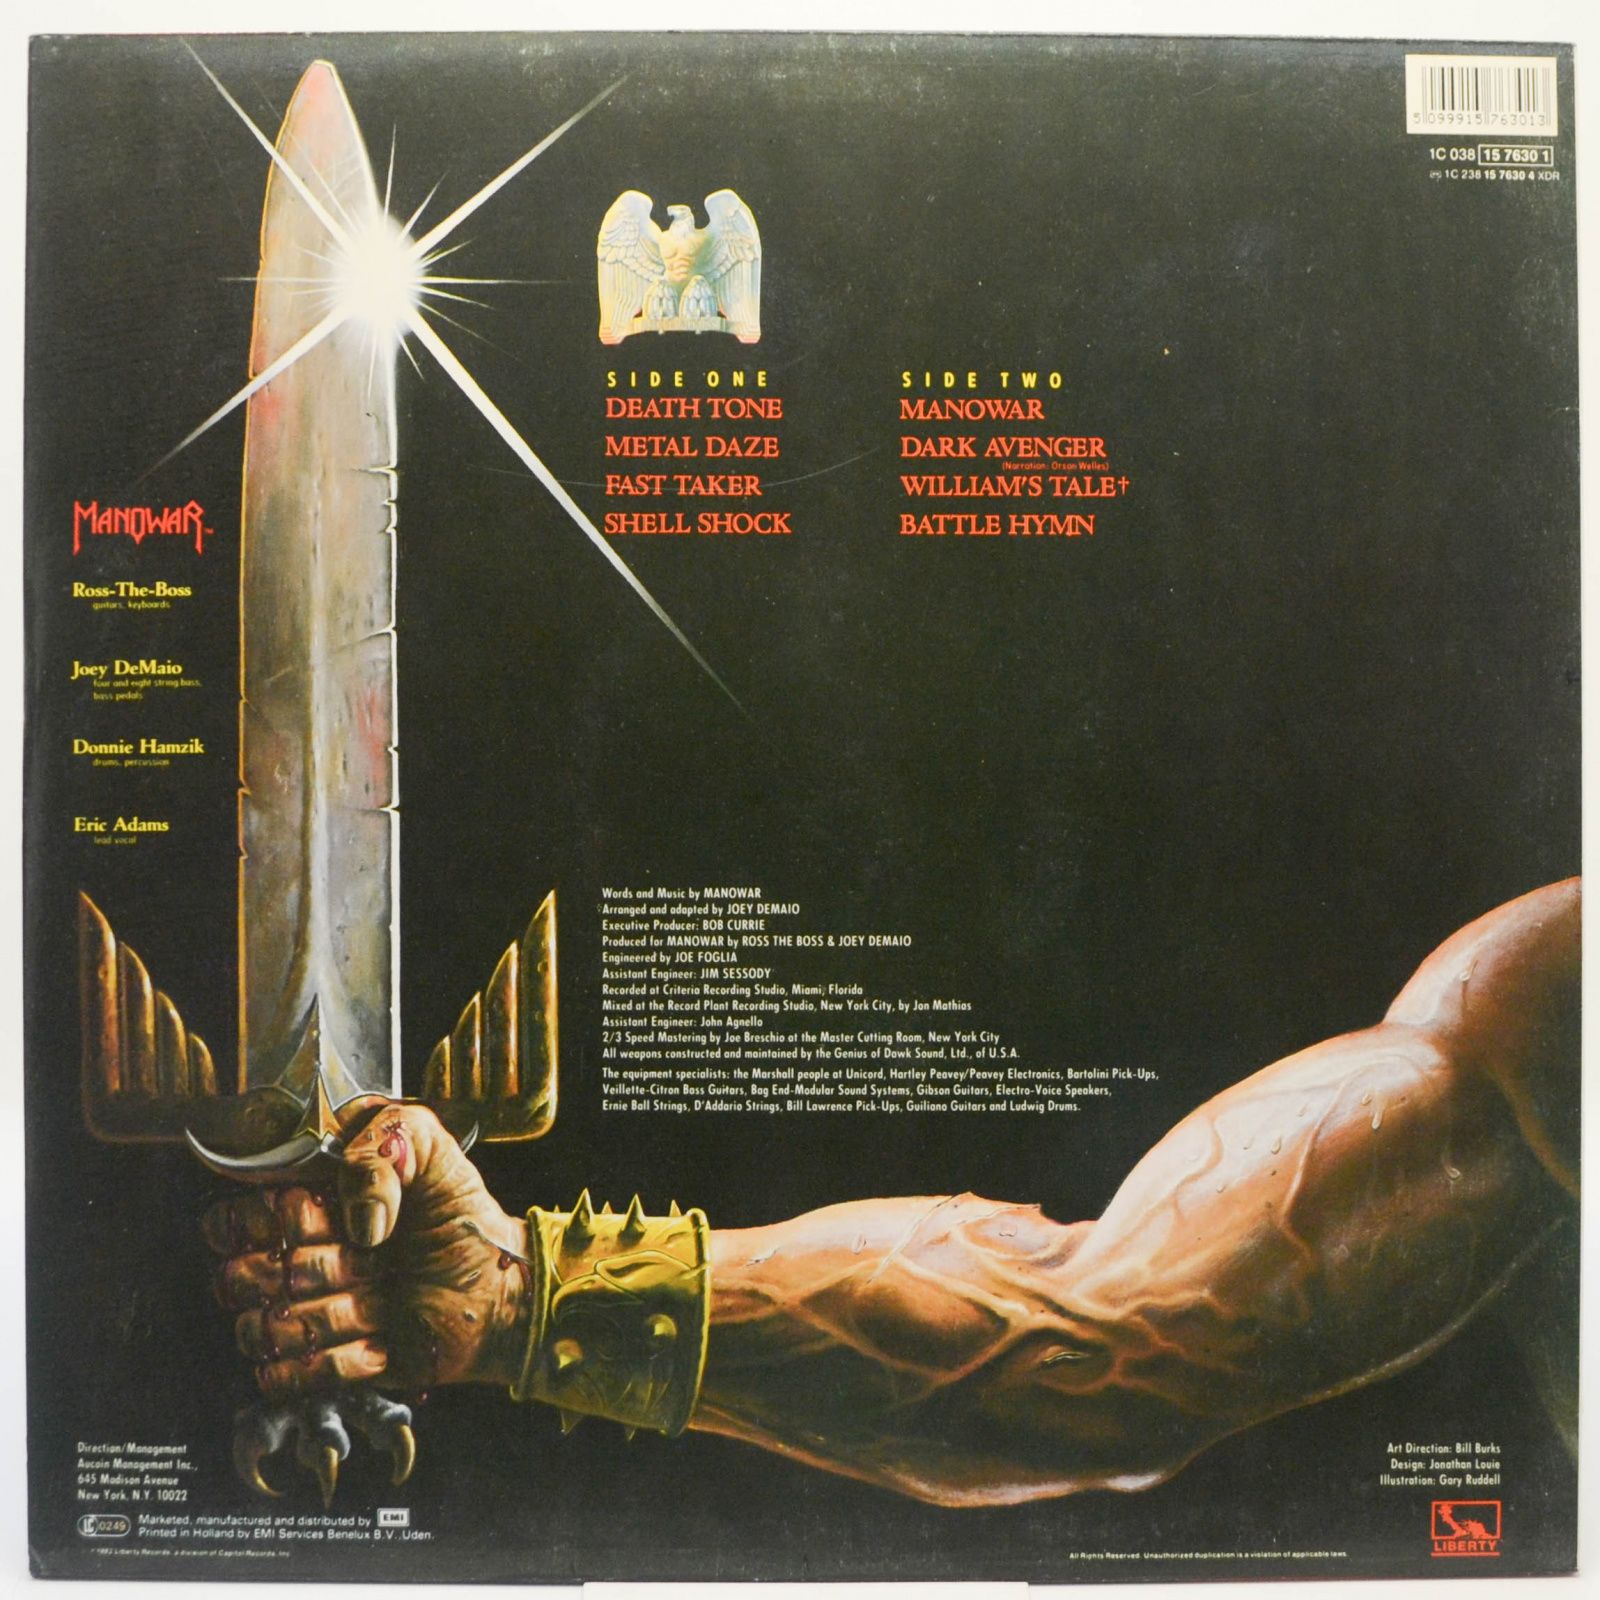 Manowar — Battle Hymns, 1982